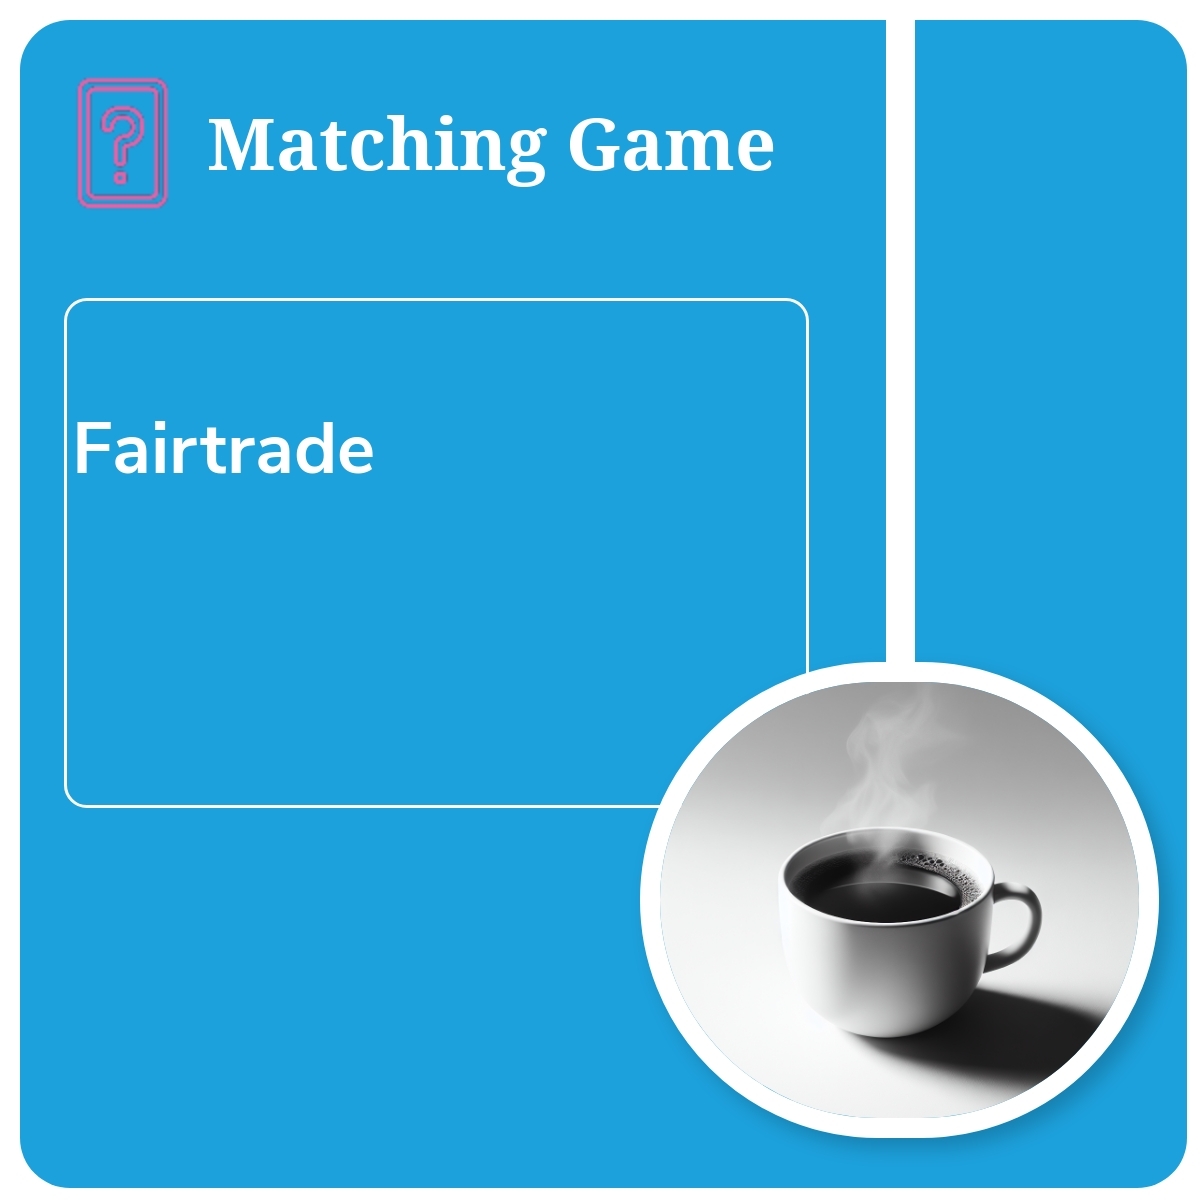 Matching Game: Fairtrade